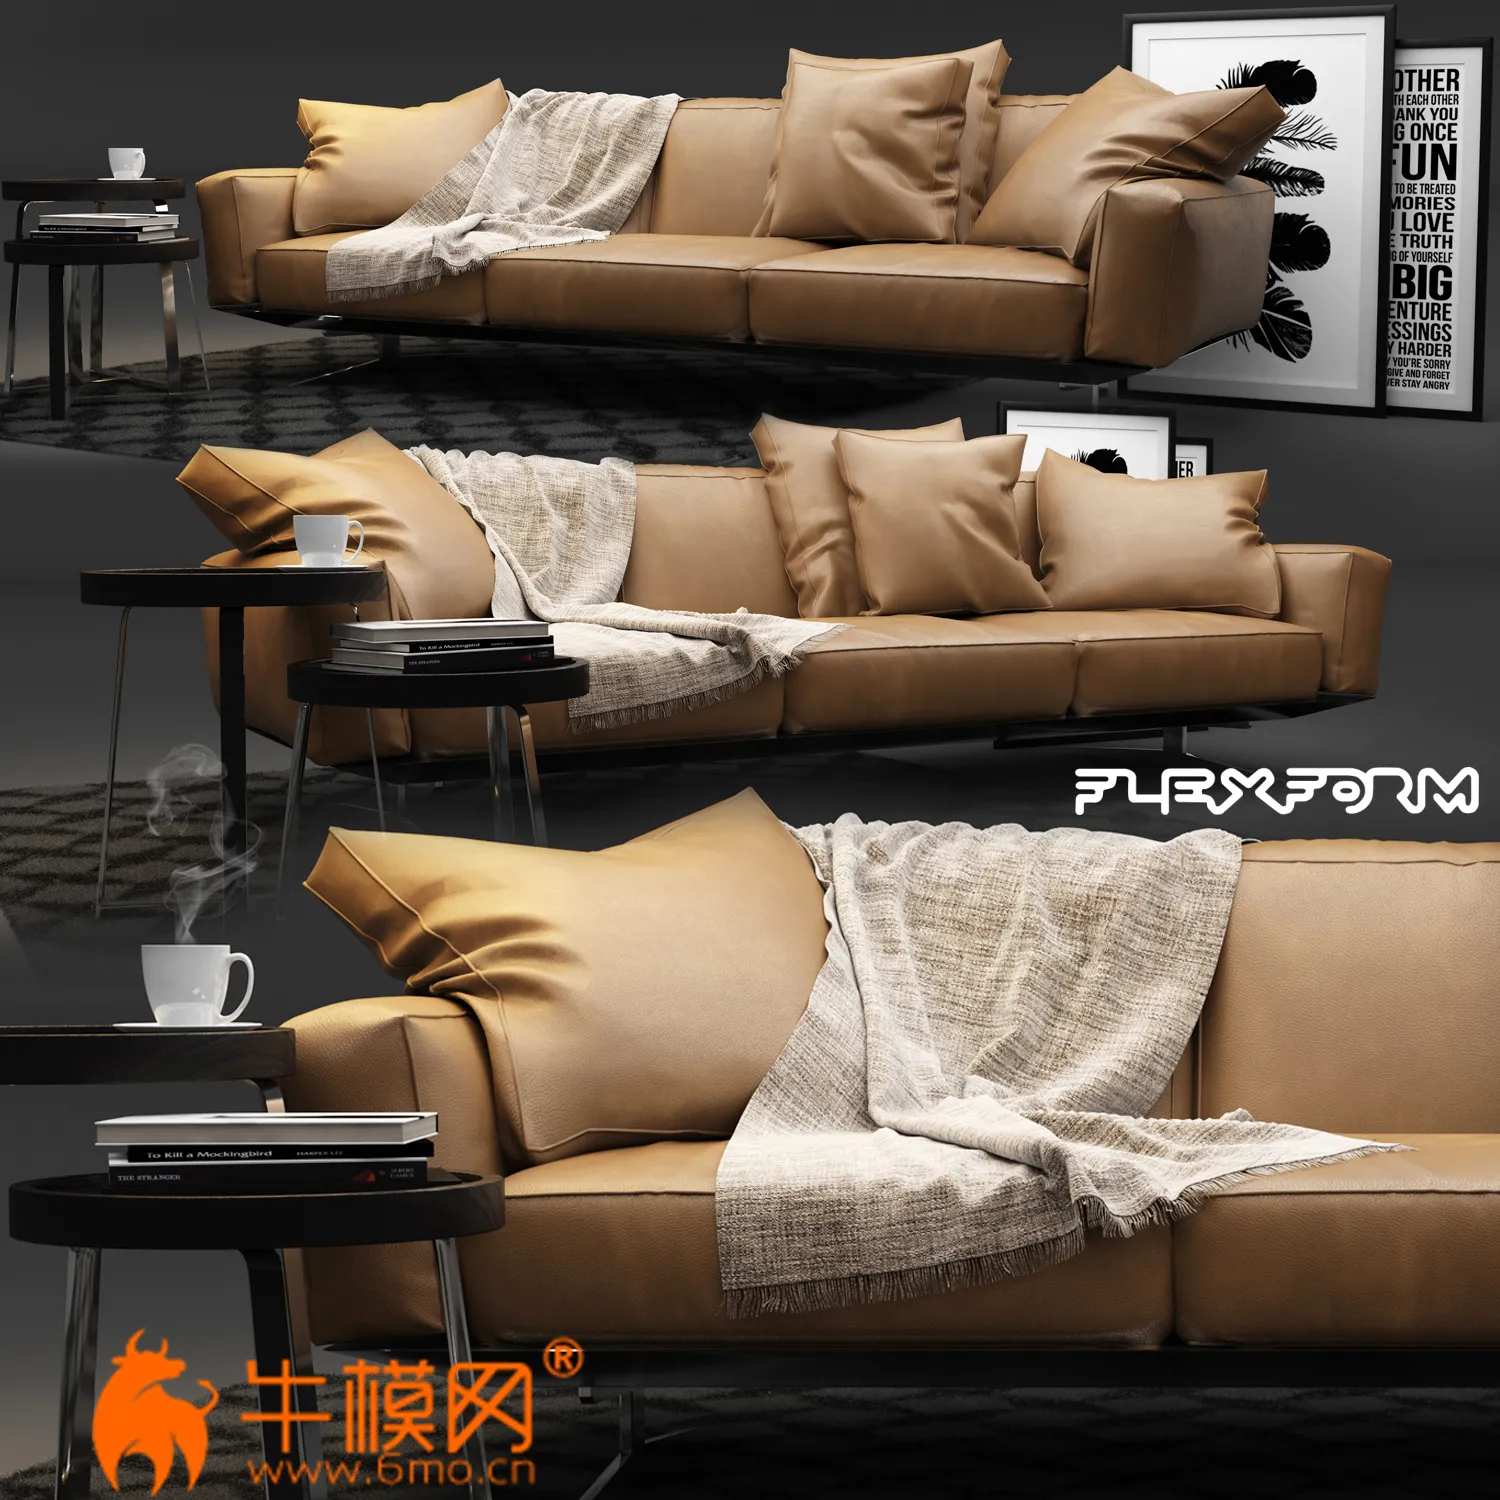 Flexform Soft Dream Sofa (max 2012 Vray) – 5977